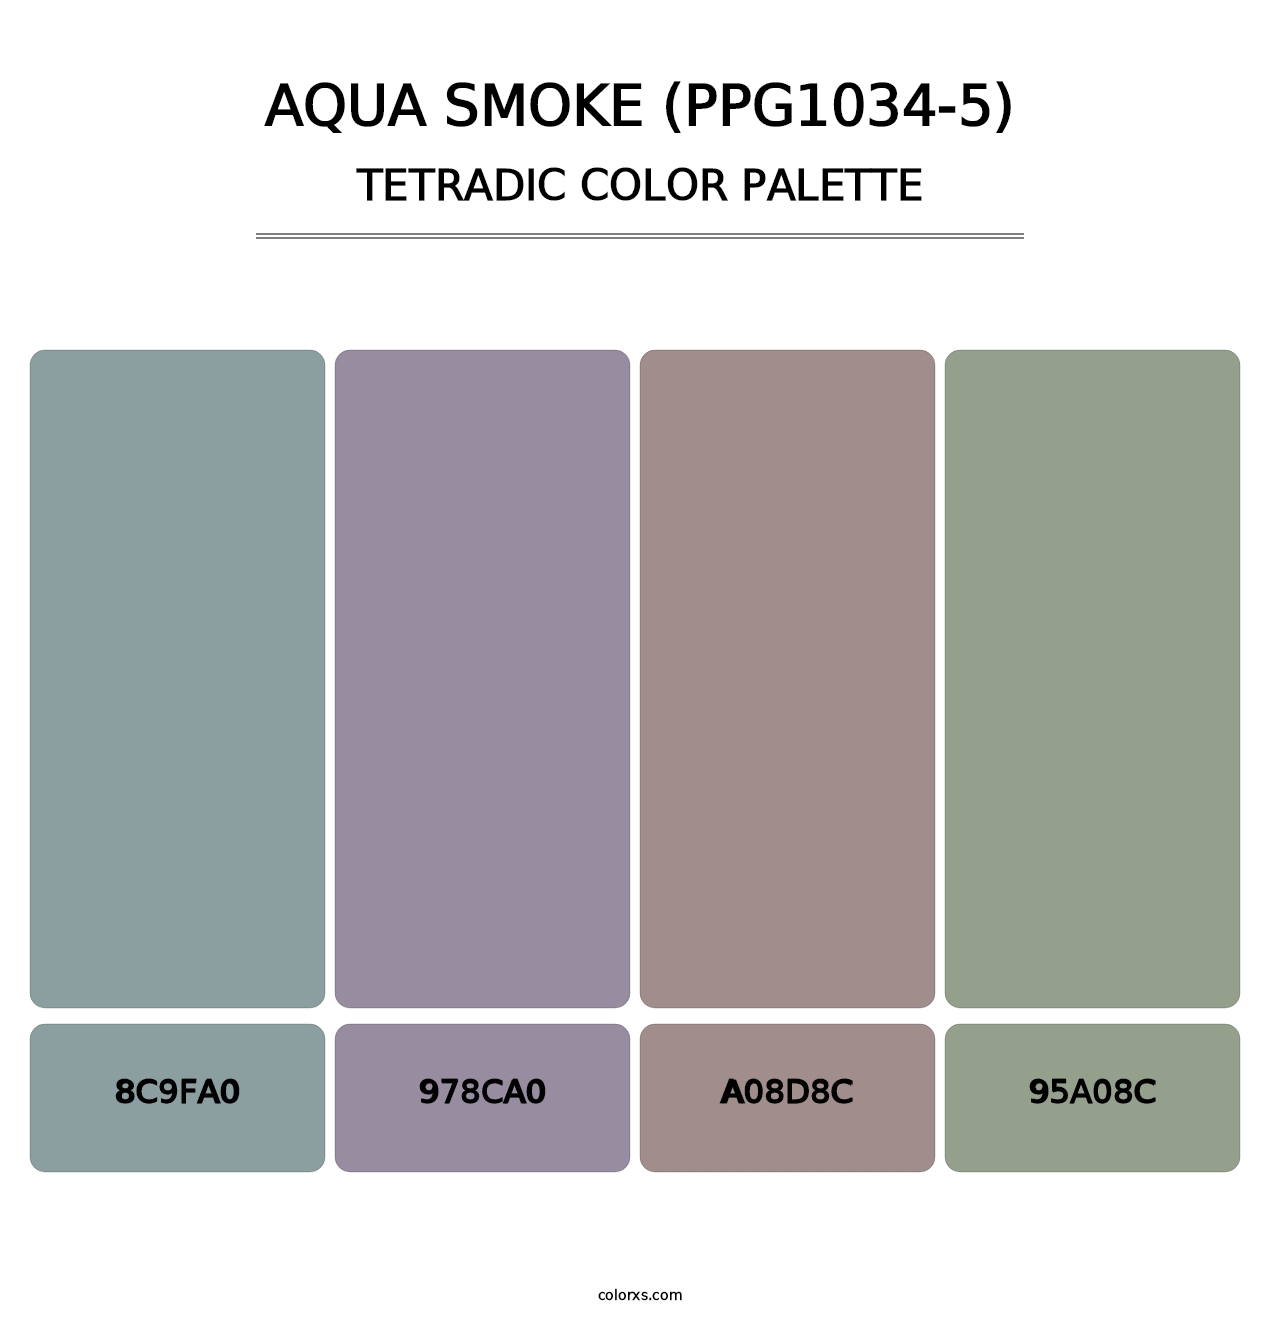 Aqua Smoke (PPG1034-5) - Tetradic Color Palette